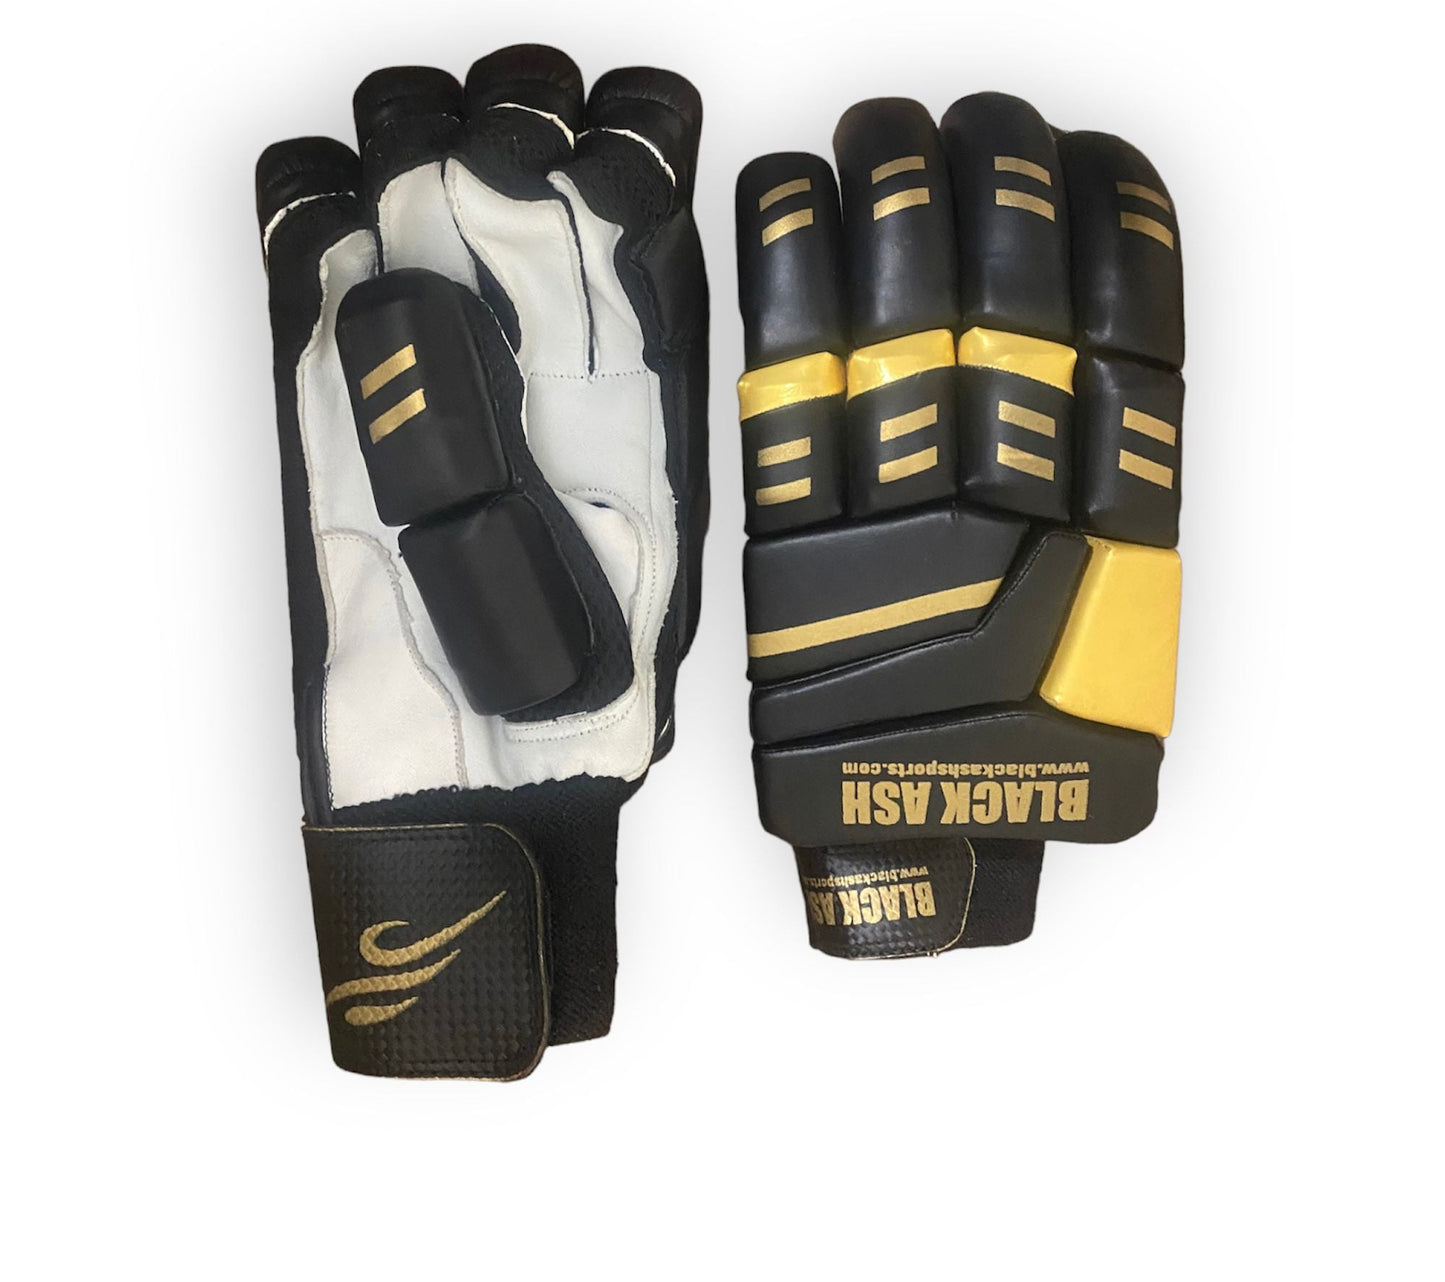 Black/Gold Cricket Batting Gloves by Black Ash - Free Shipping